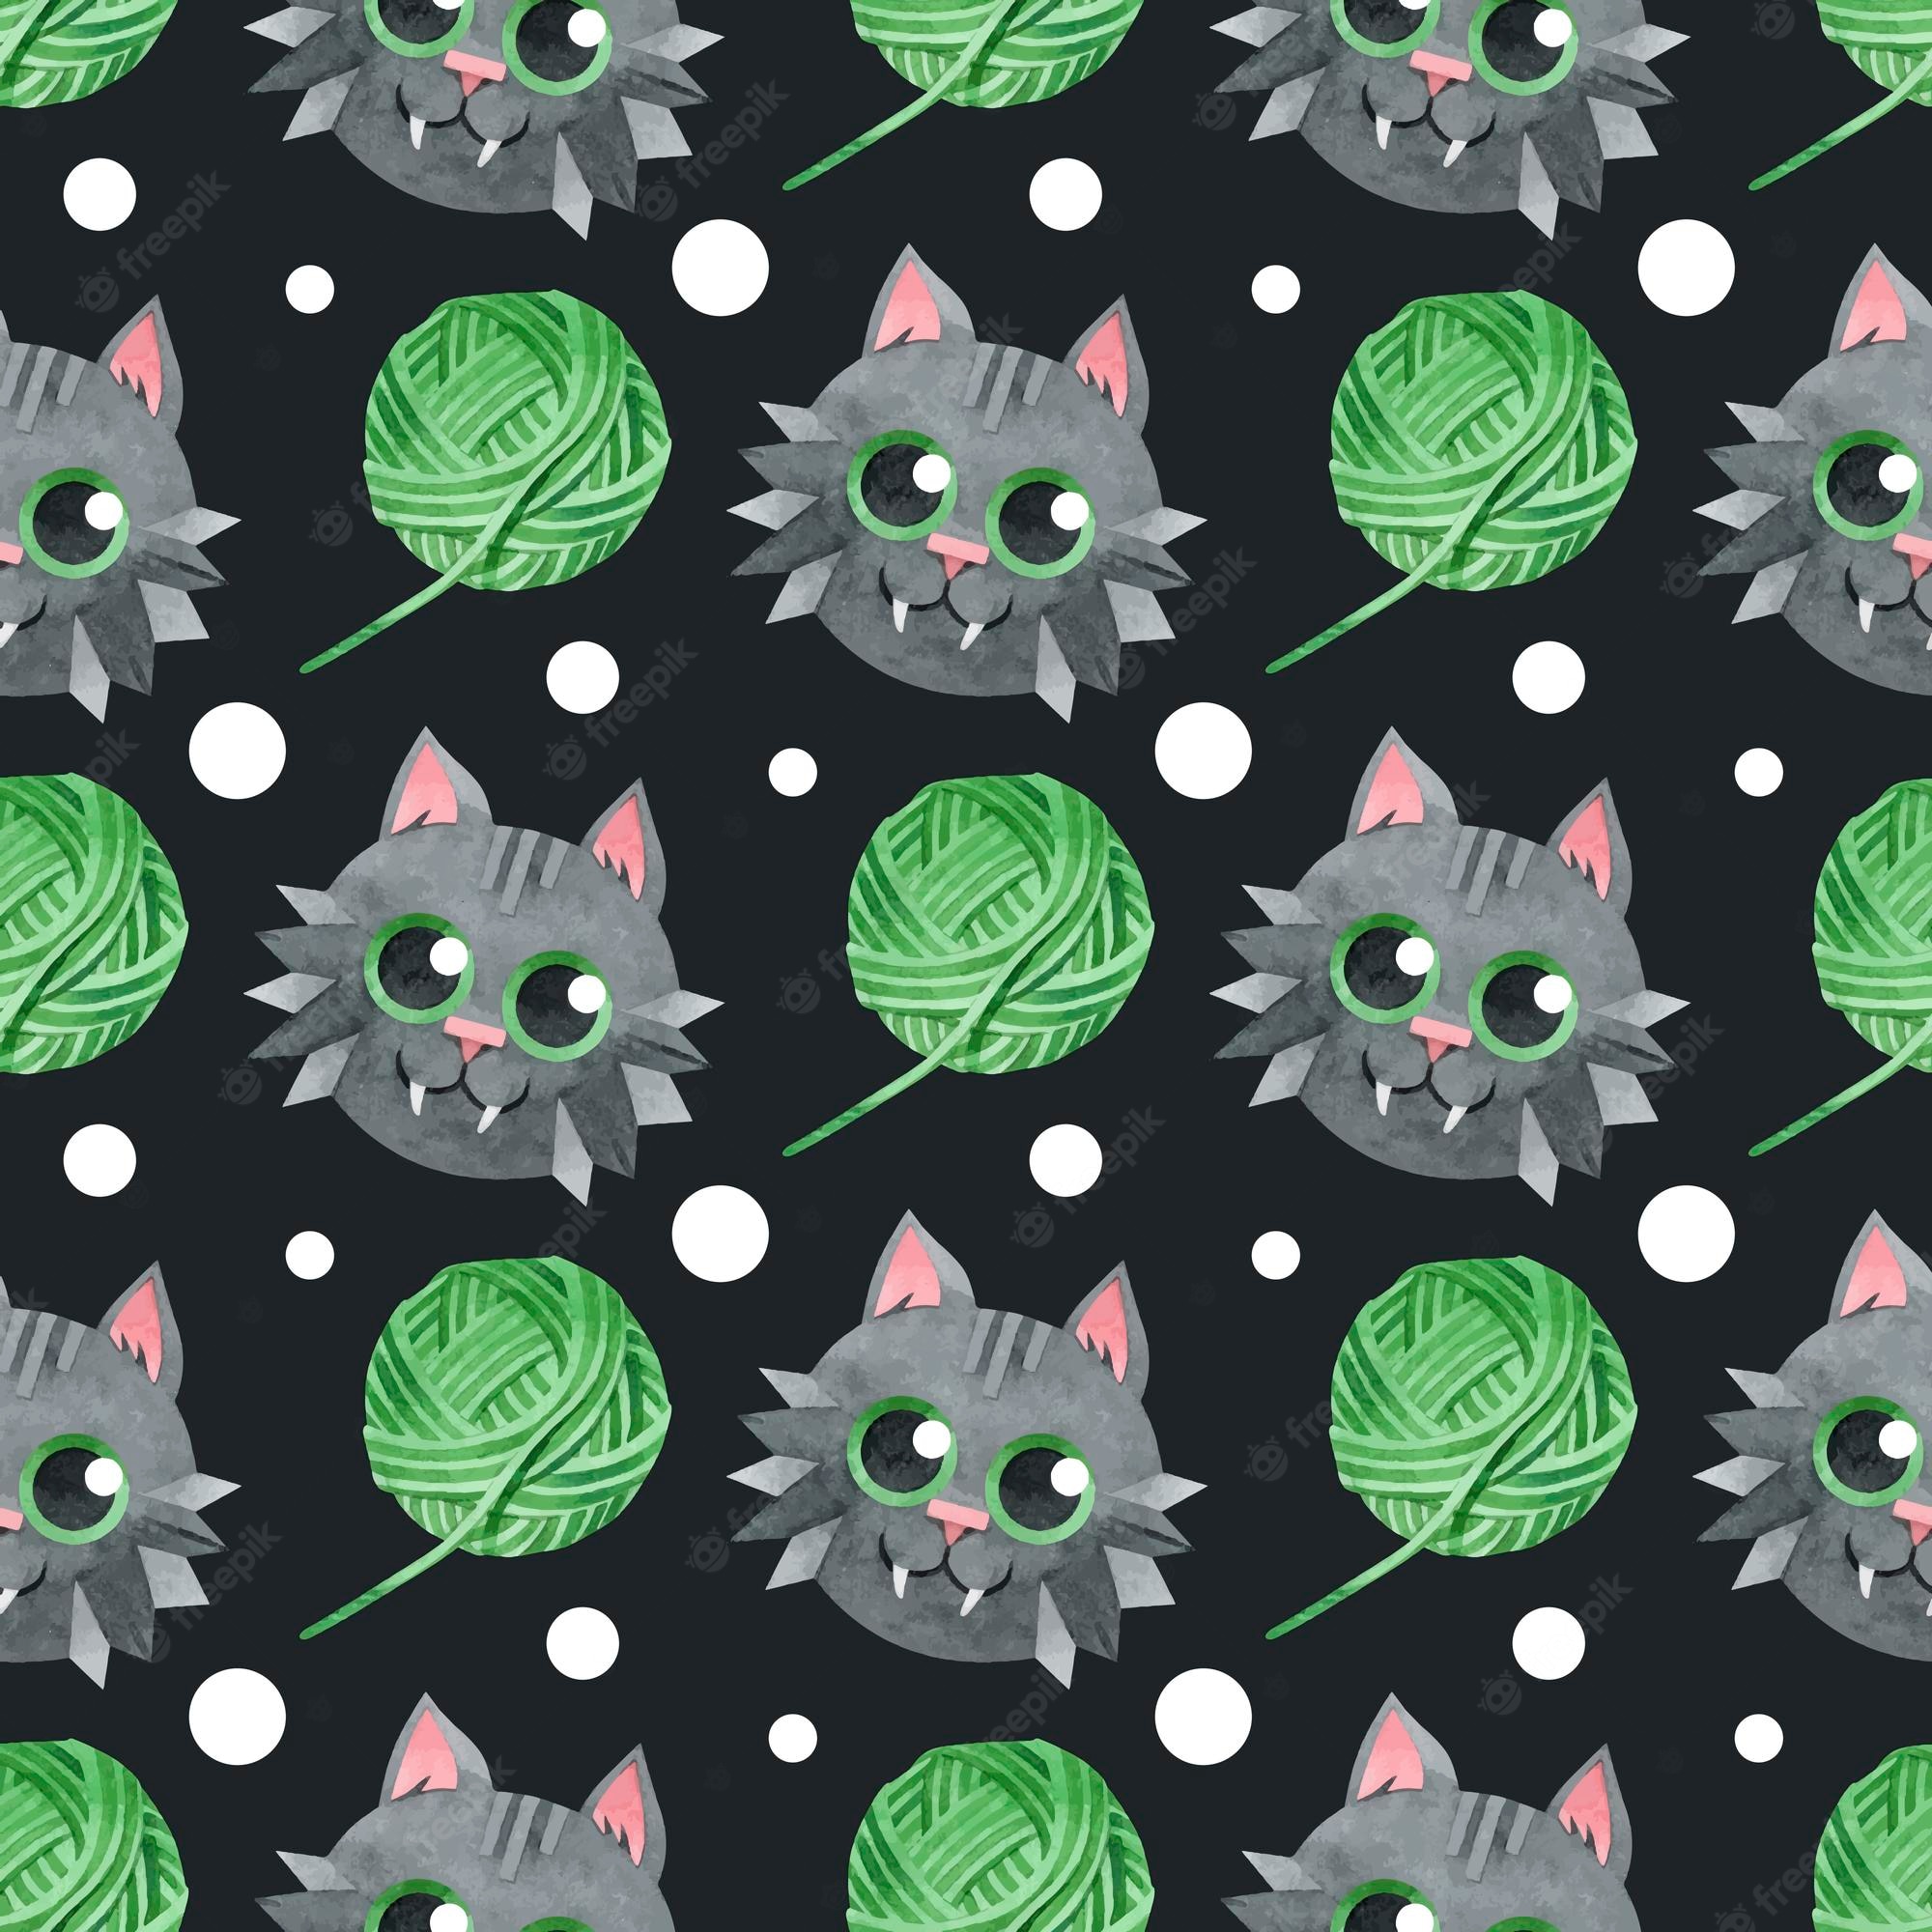 Green Cat Art Wallpapers